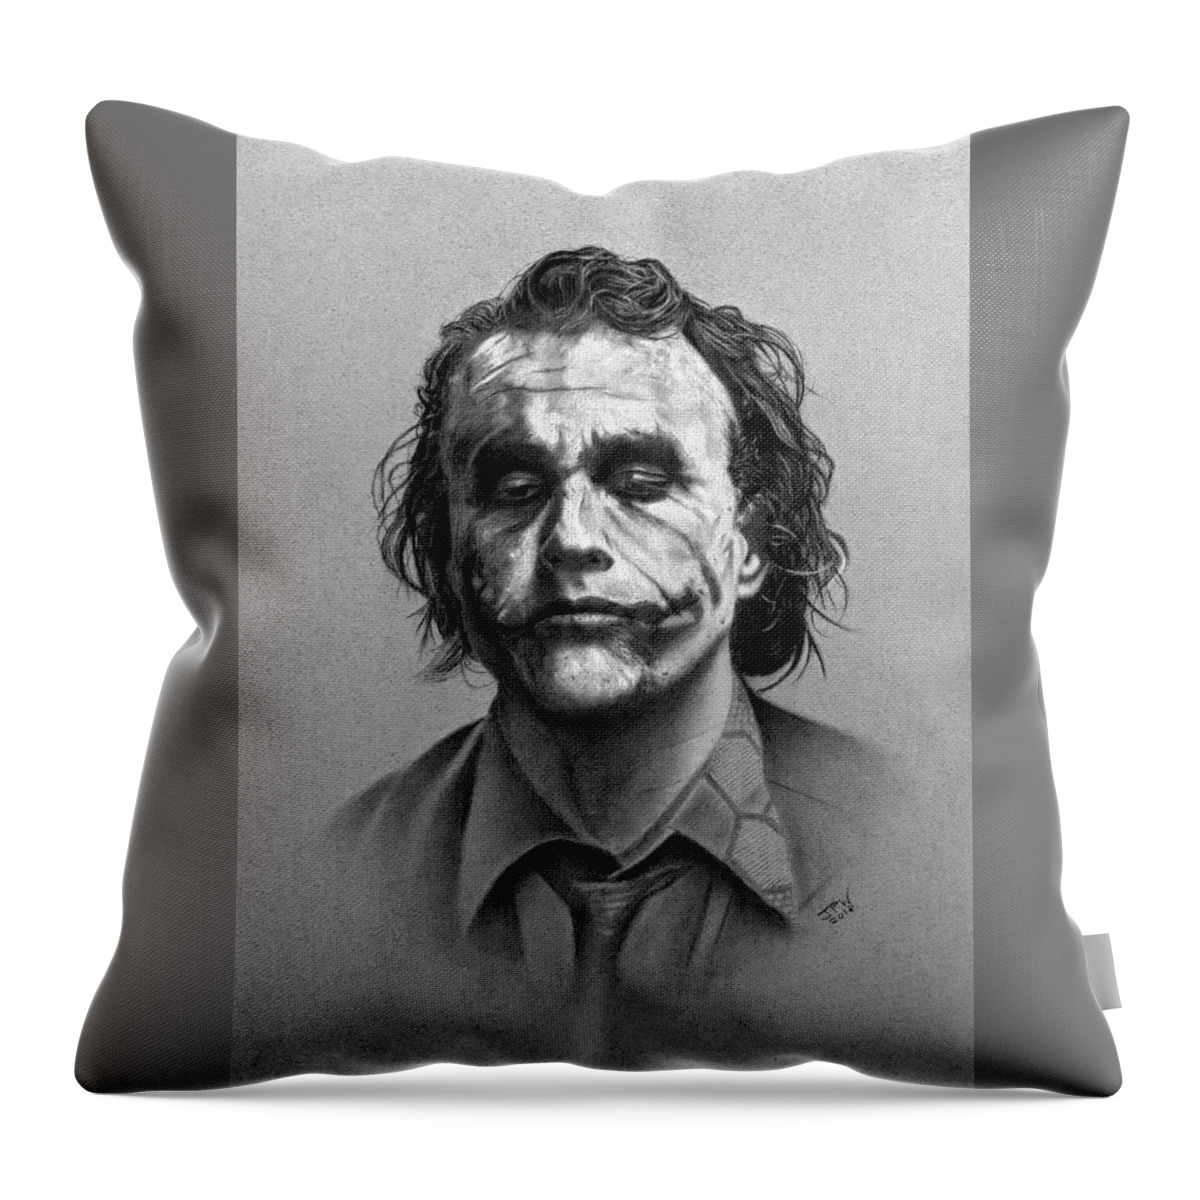 The Joker Throw Pillow featuring the drawing The Joker by JPW Artist